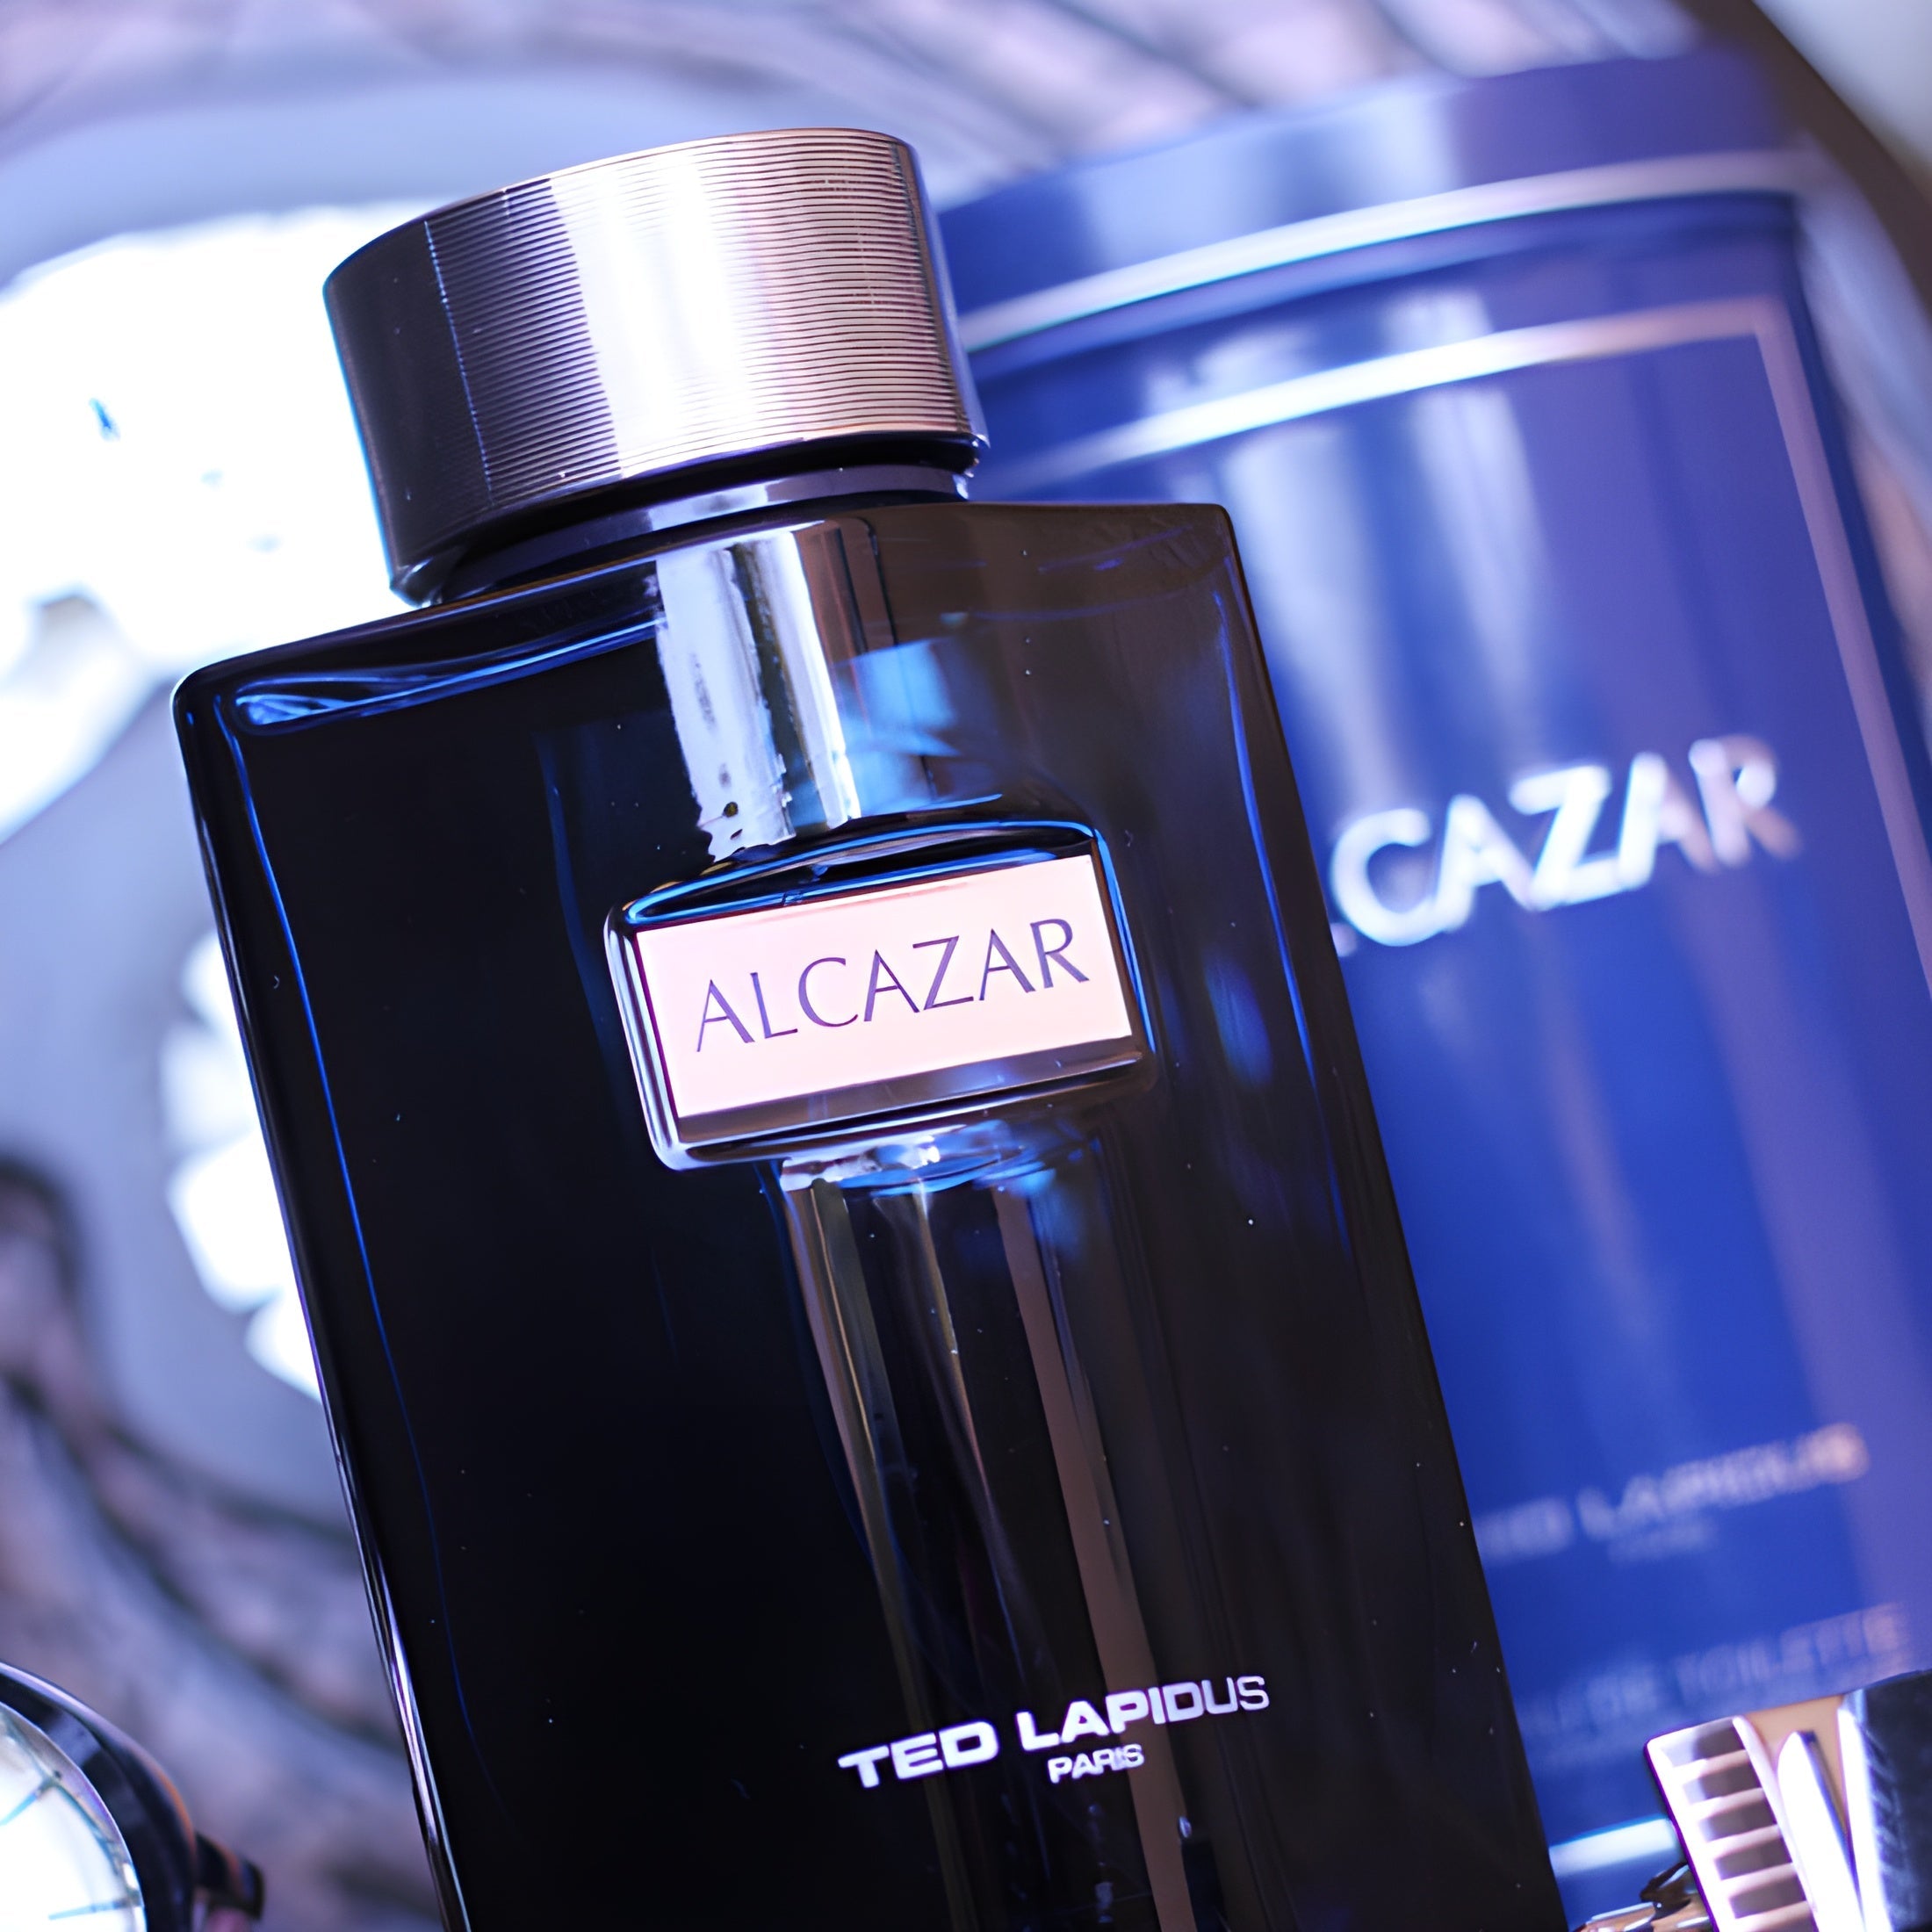 Ted Lapidus Alcazar EDT | My Perfume Shop Australia